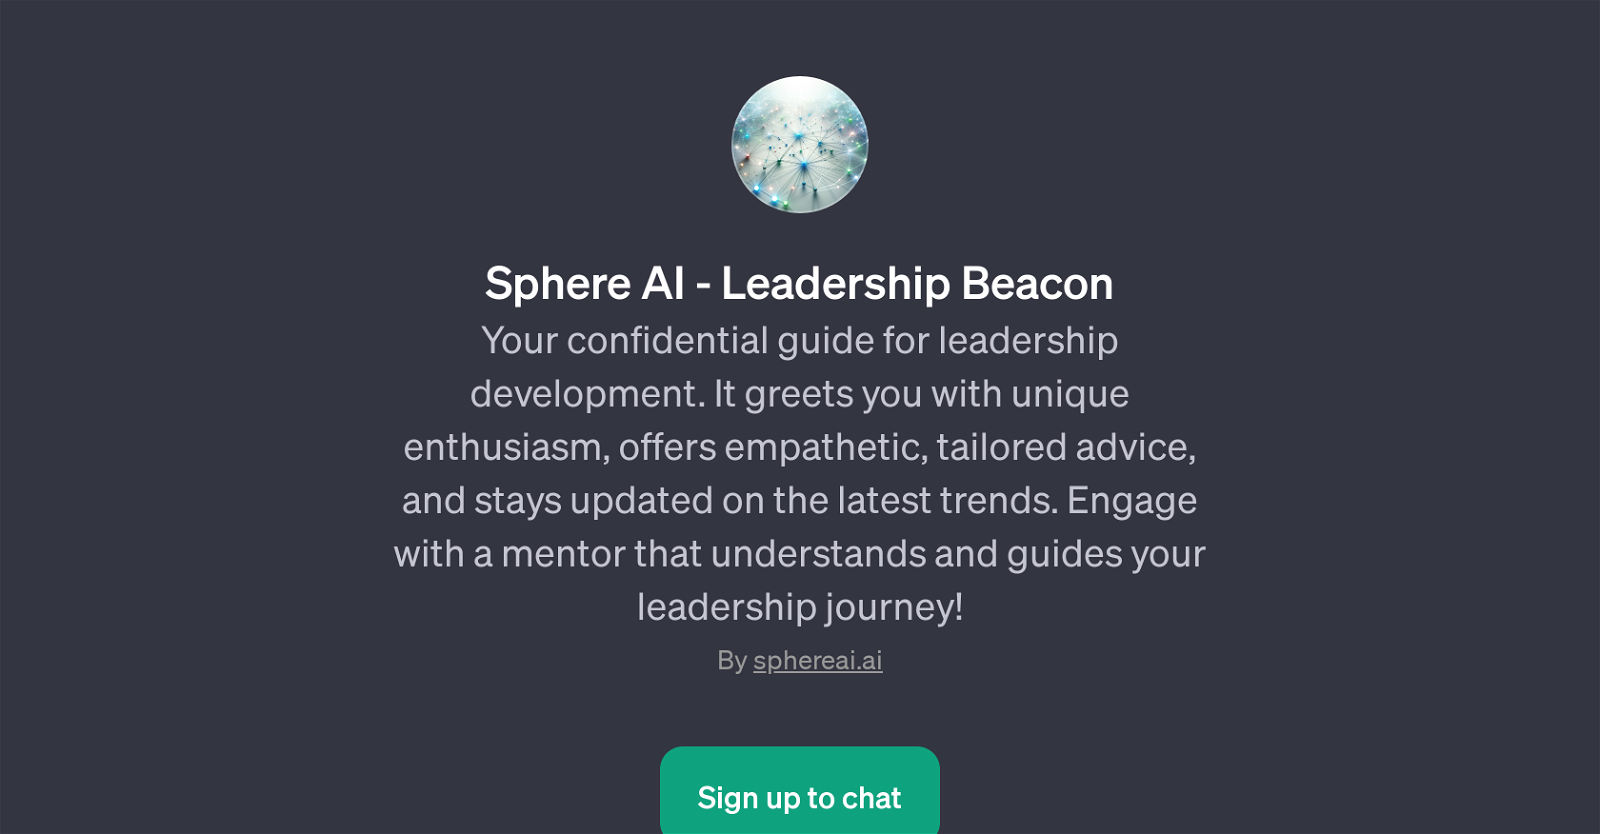 Sphere AI - Leadership Beacon website